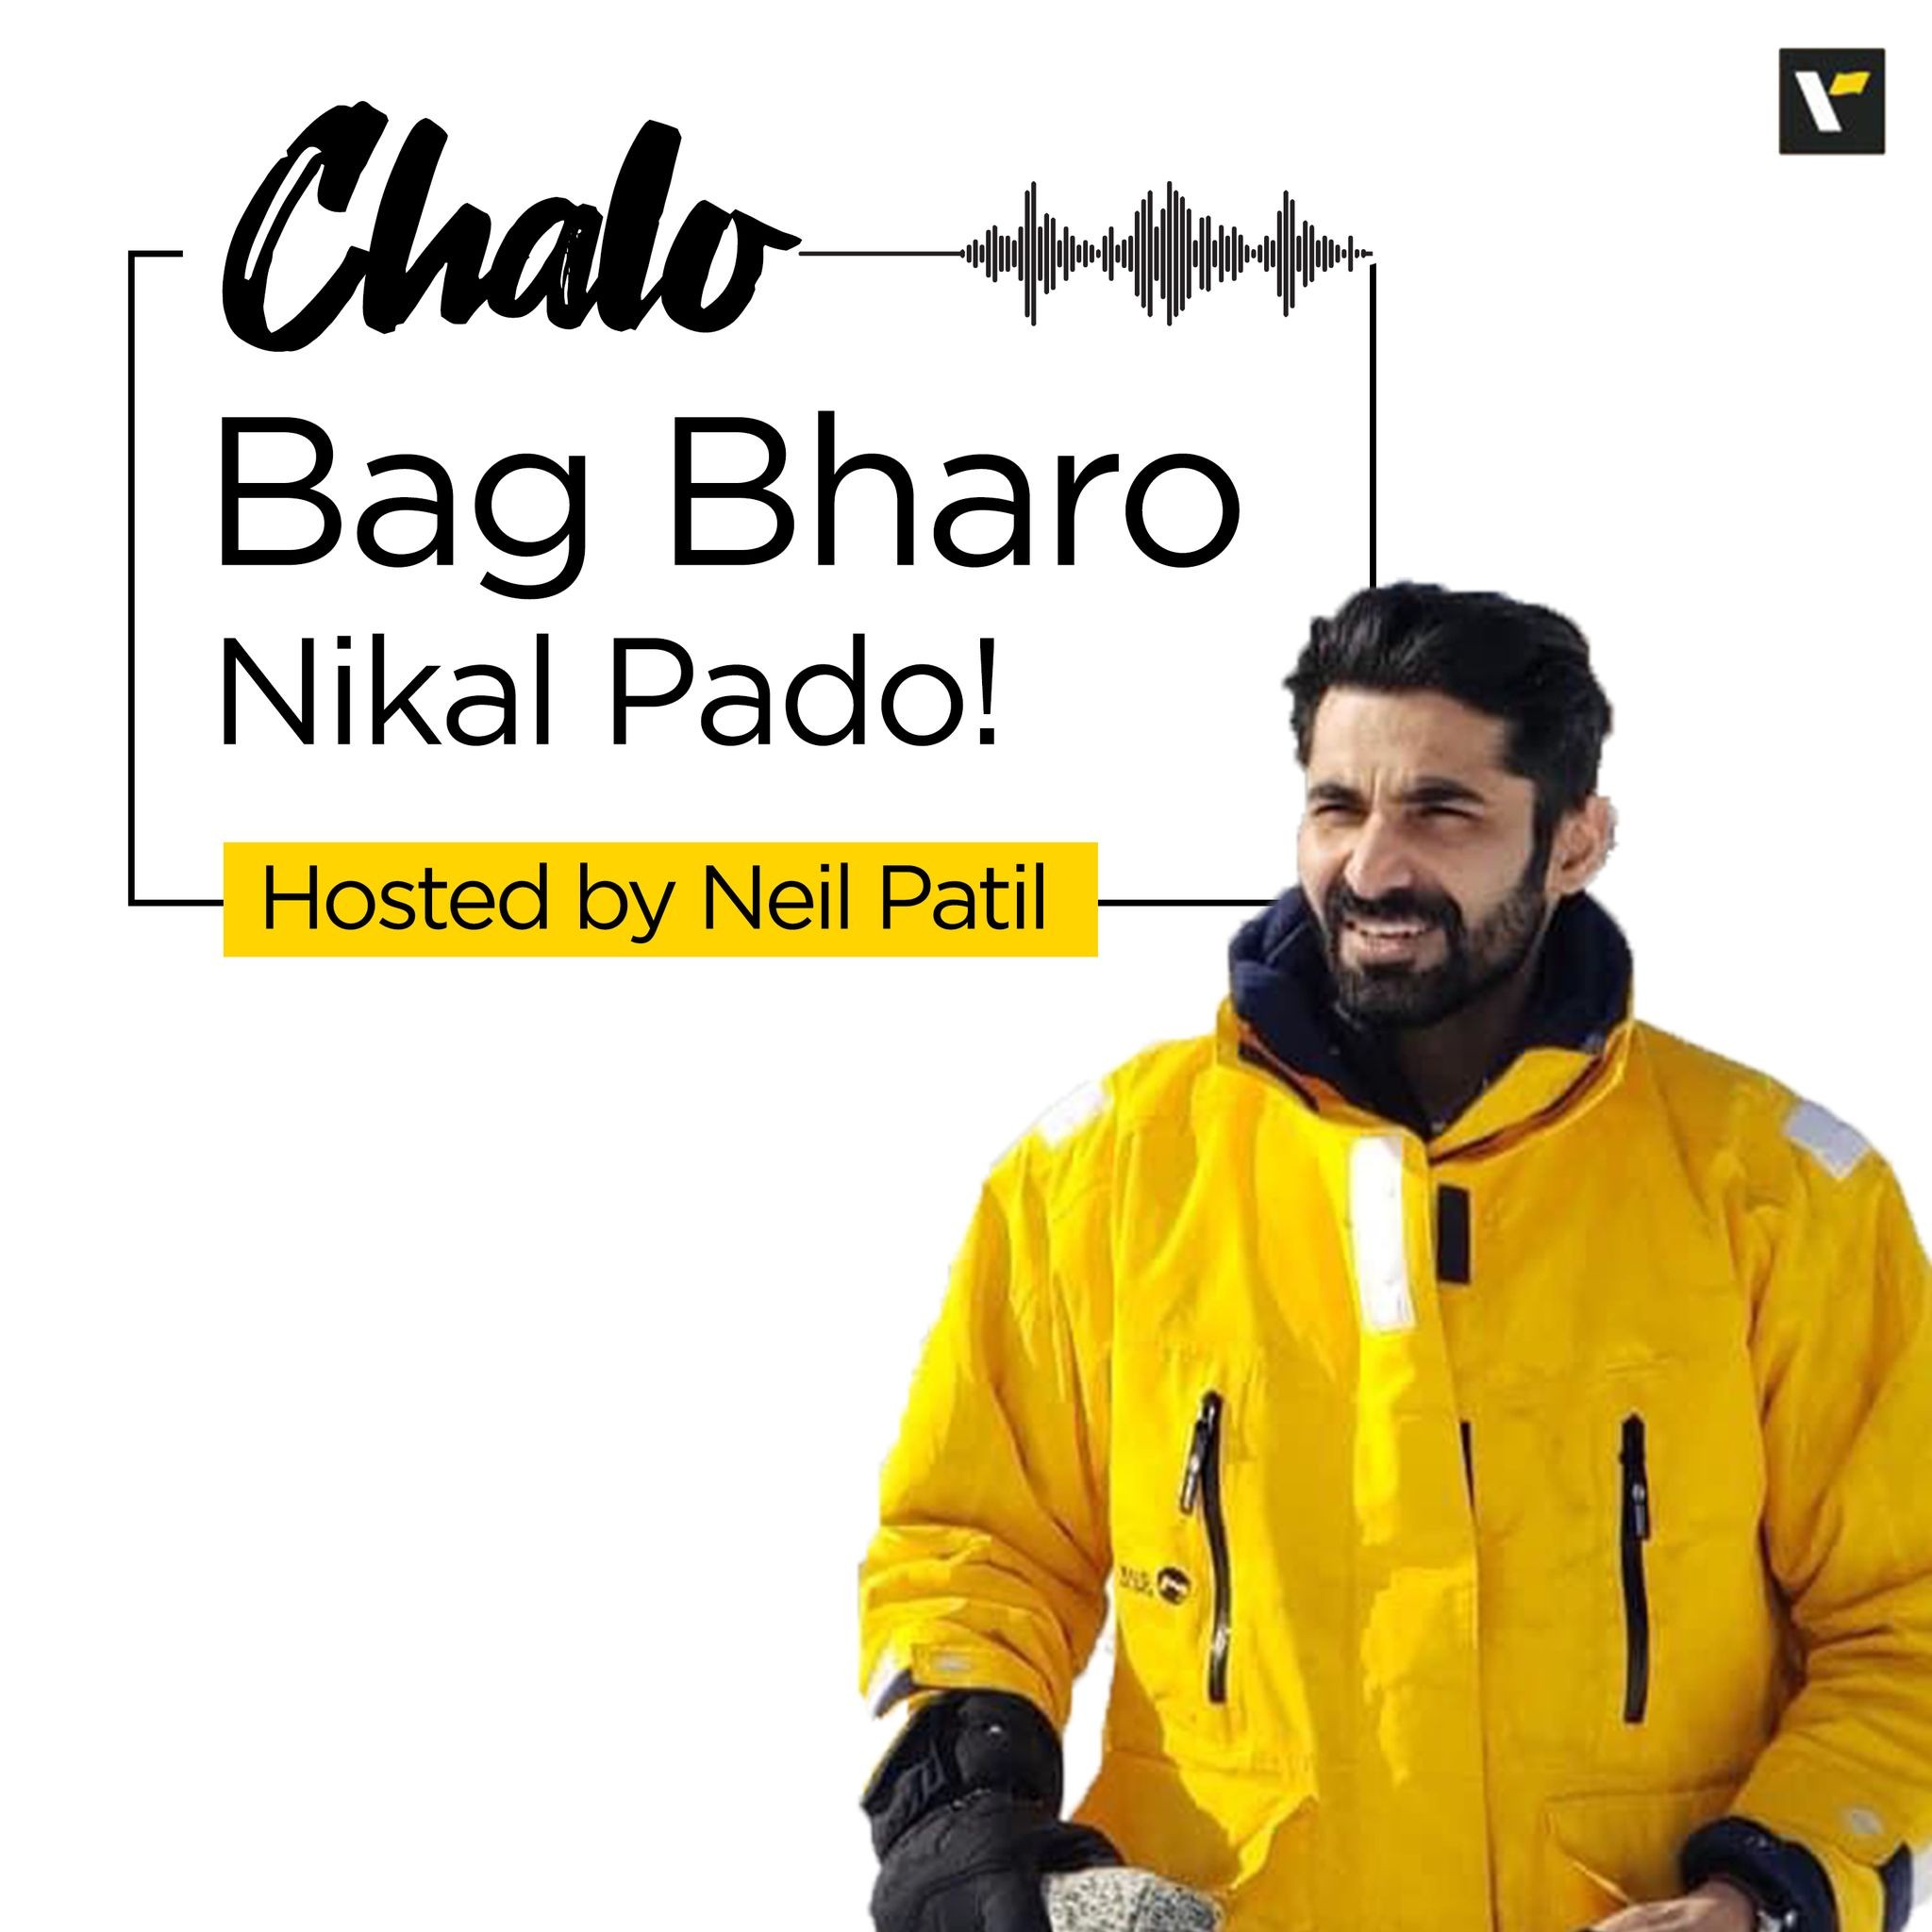 Chalo Bag Bharo Nikal Pado